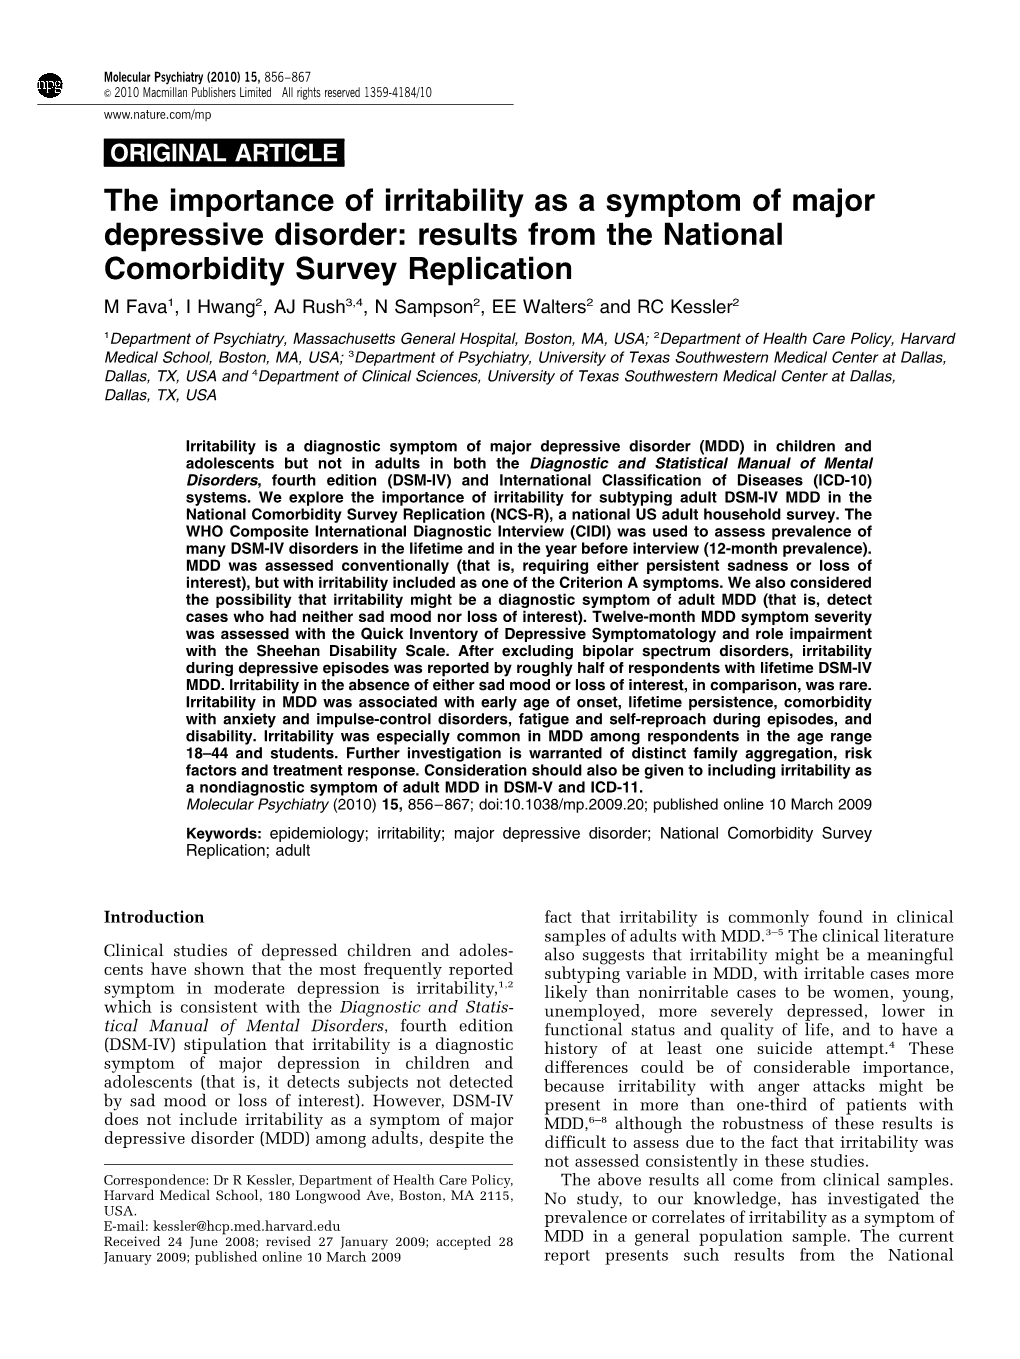 The Importance of Irritability As a Symptom of Major Depressive Disorder